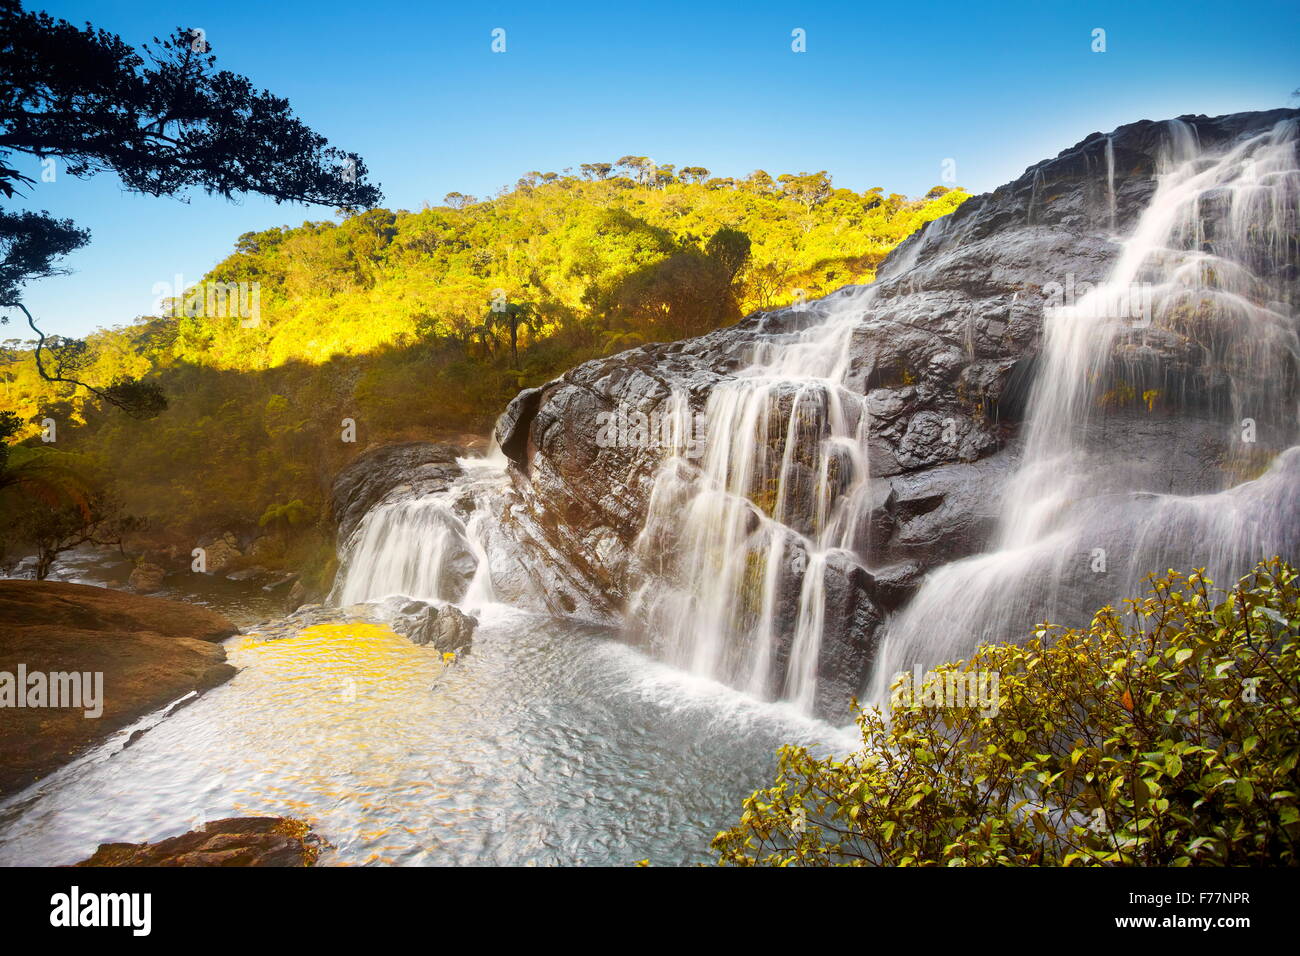 Sri Lanka - landscape with waterfall in the Horton Plain National Park, Baker waterfall, Sri Lanka Stock Photo